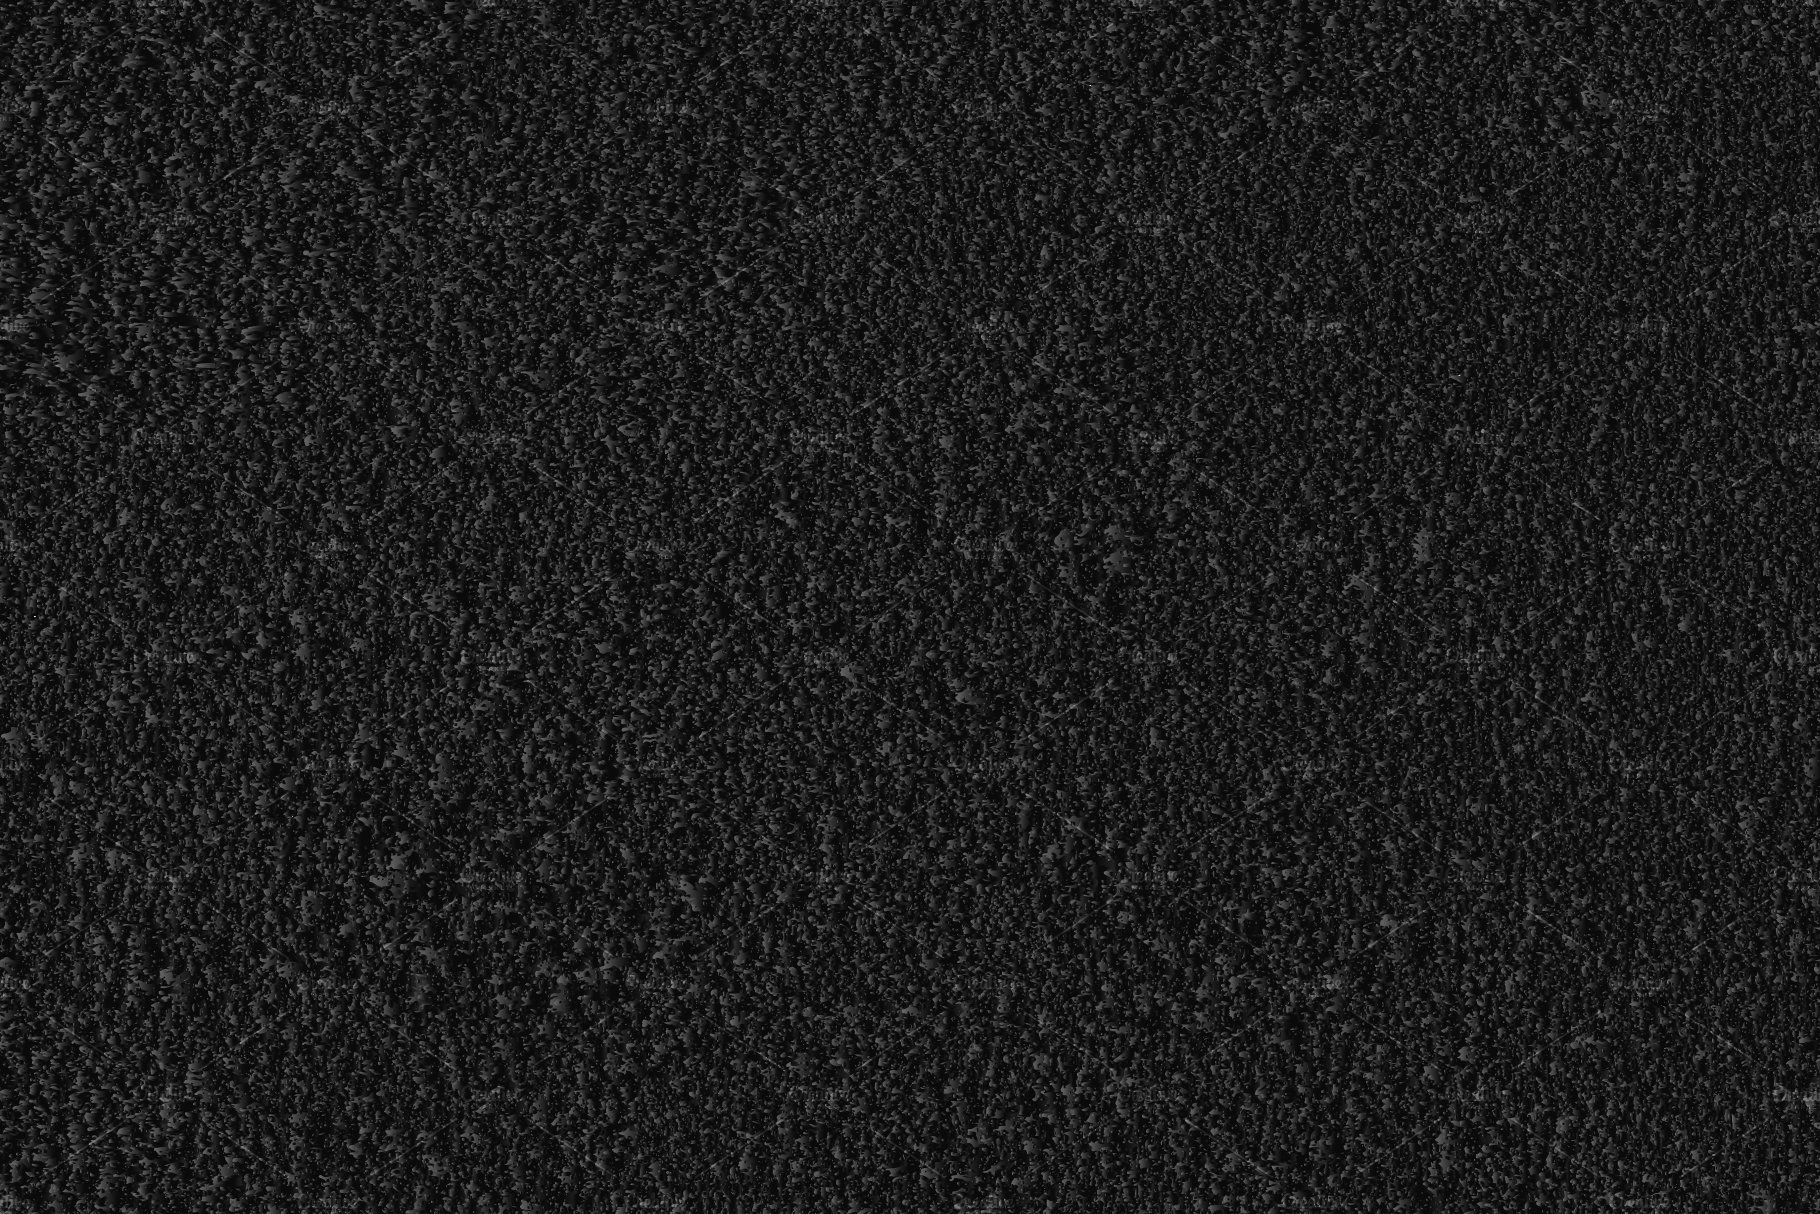 Dark Black Texture Background cover image.